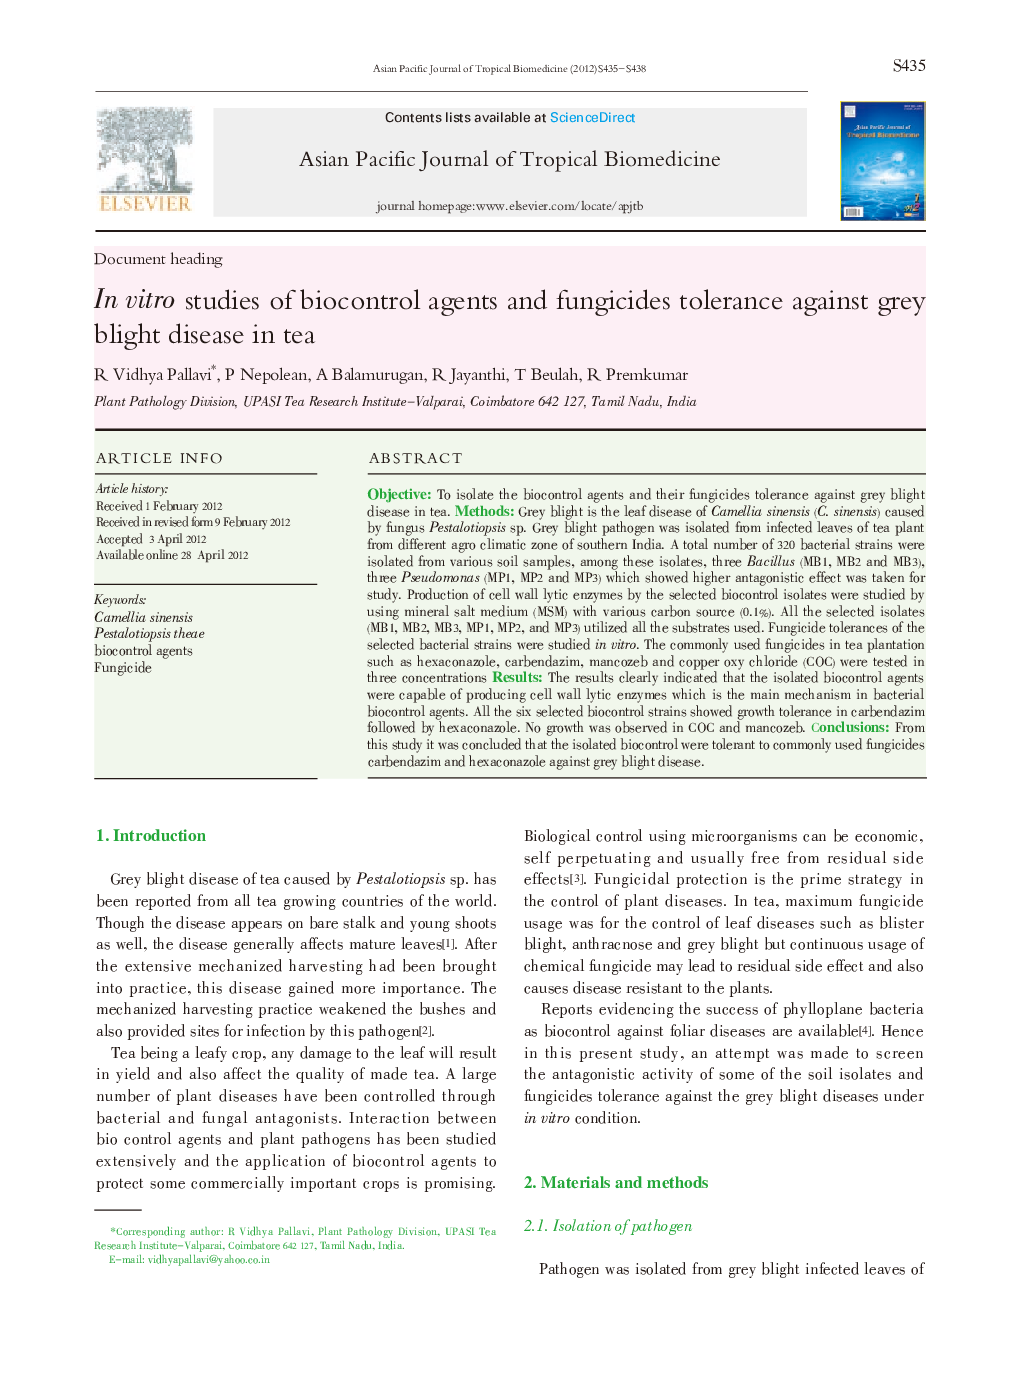 In vitro studies of biocontrol agents and fungicides tolerance against grey blight disease in tea